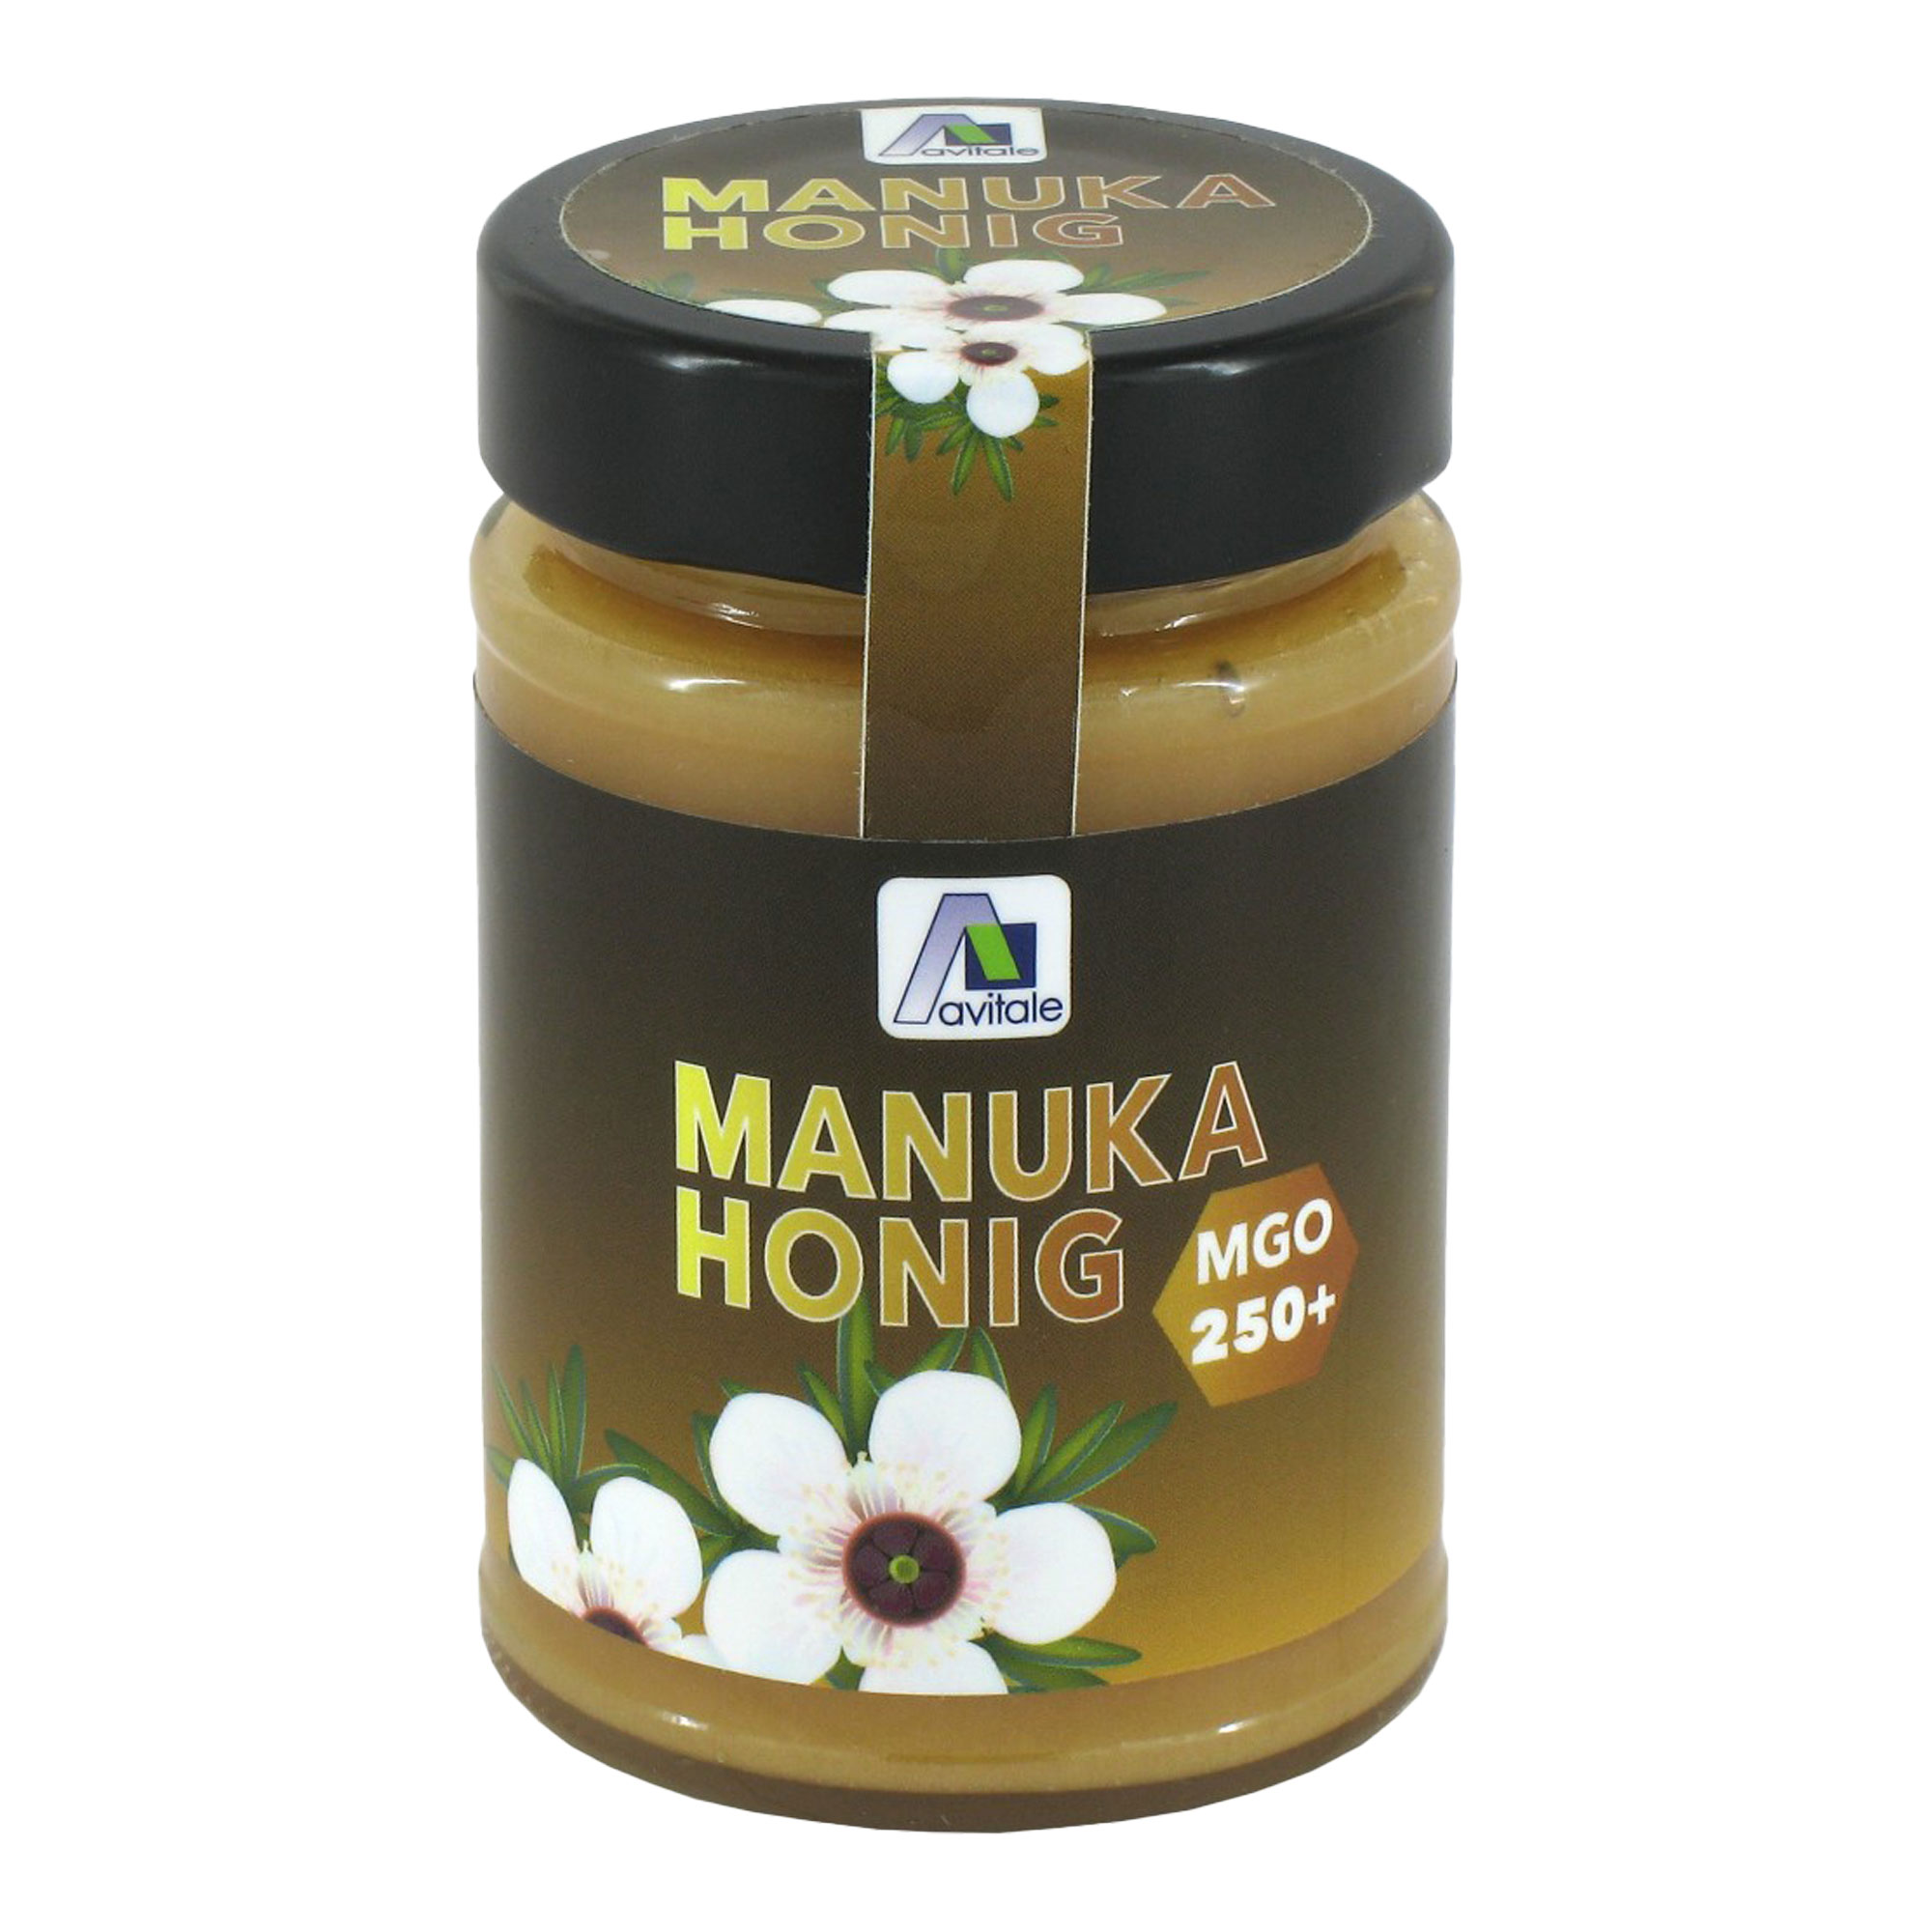 Honig aus Neuseeland mit mindestens 250 mg Methylglyoxal (MGO) pro Kilogramm Honig.